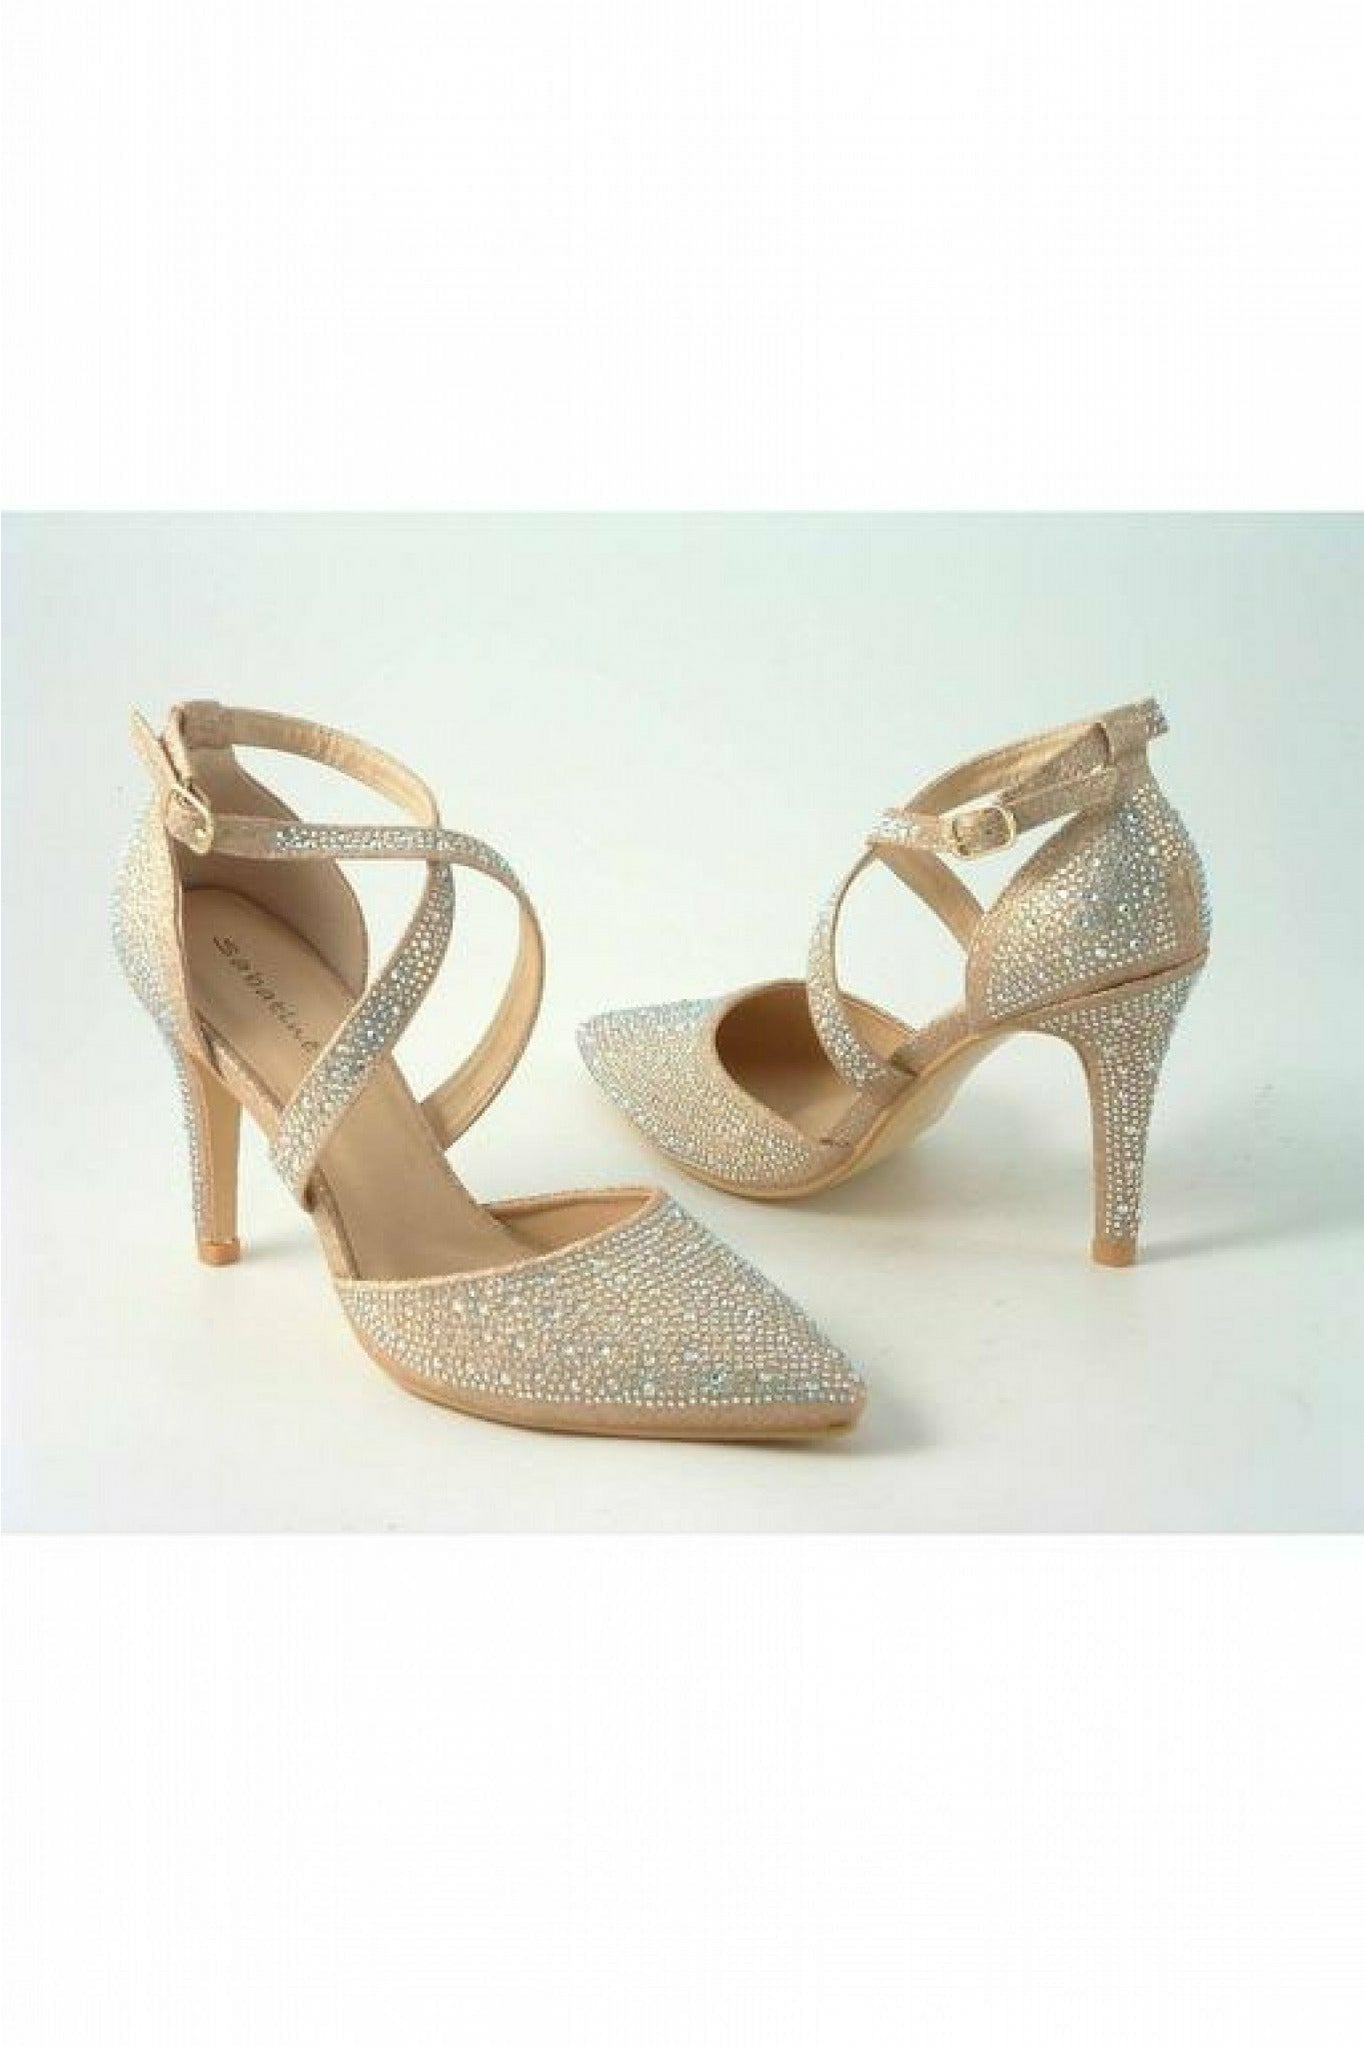 Clora Sabatine Diamante Strapped Court Shoe Clora